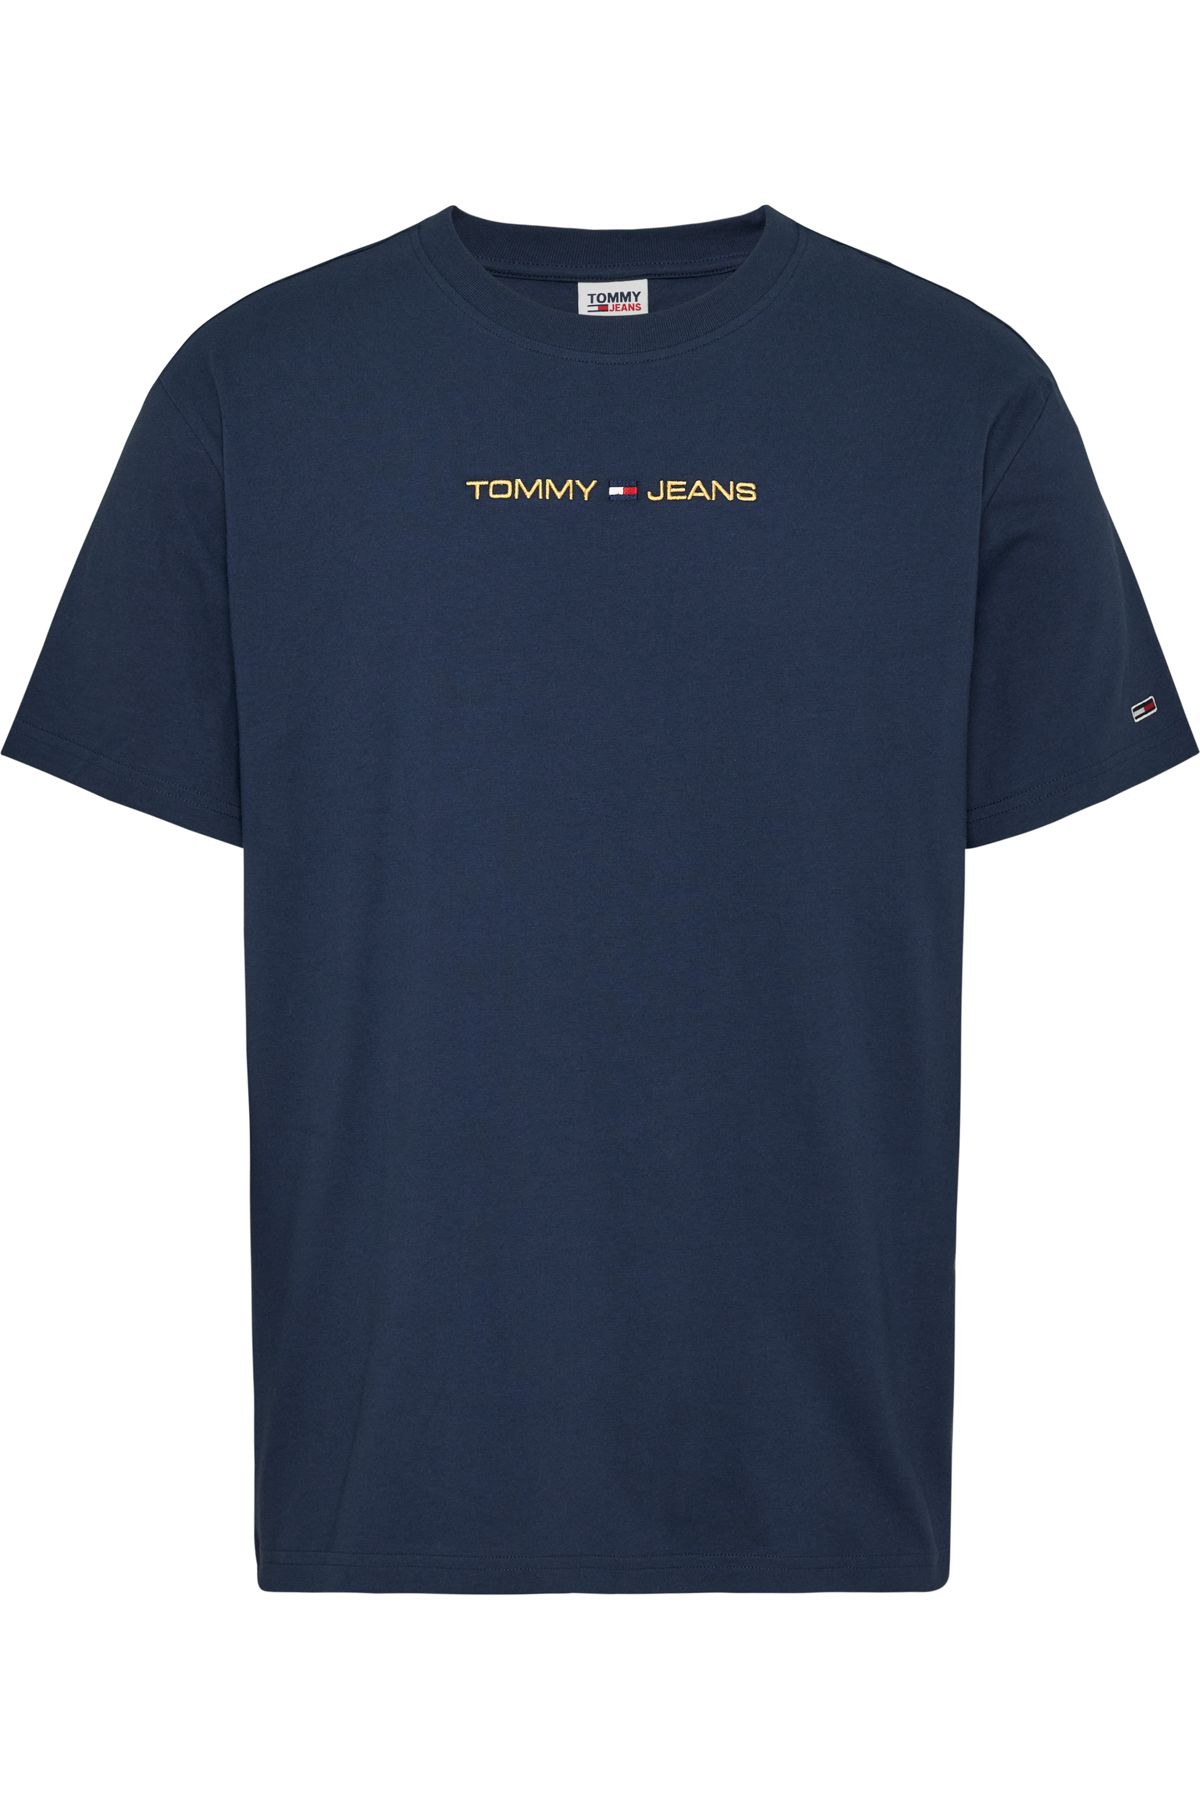 Tommy Hilfiger T-Shirt Herren Trendyol Twilight - Navy